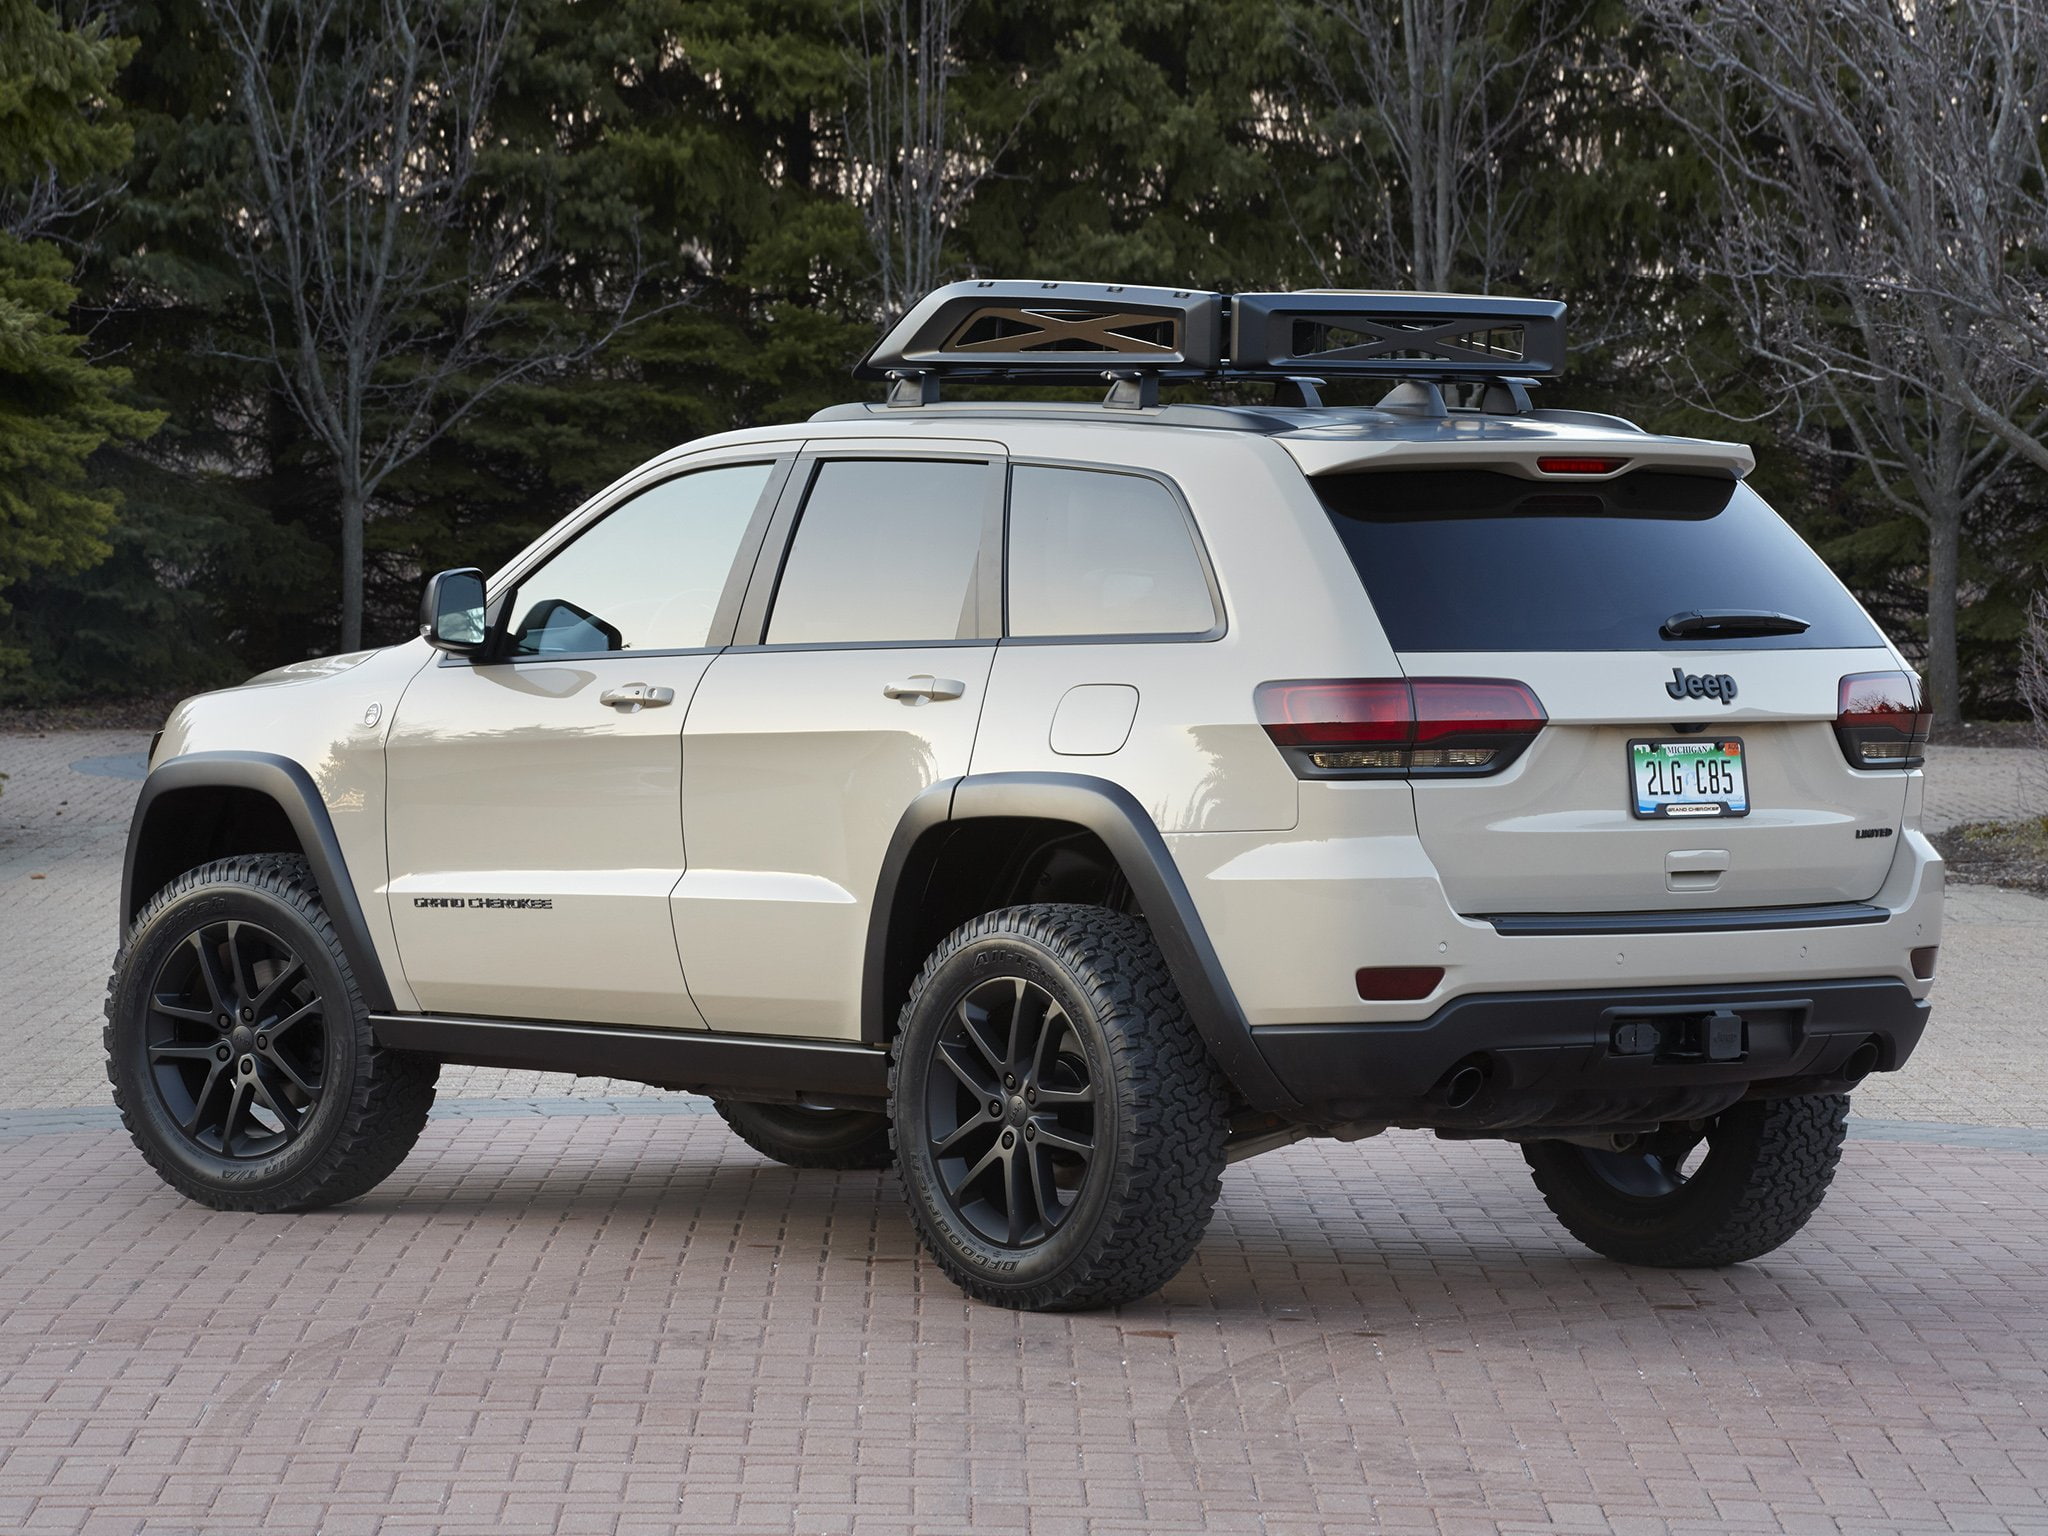 2014, 4x4, cherokee, concept, grand, jeep, stationwagon, suv